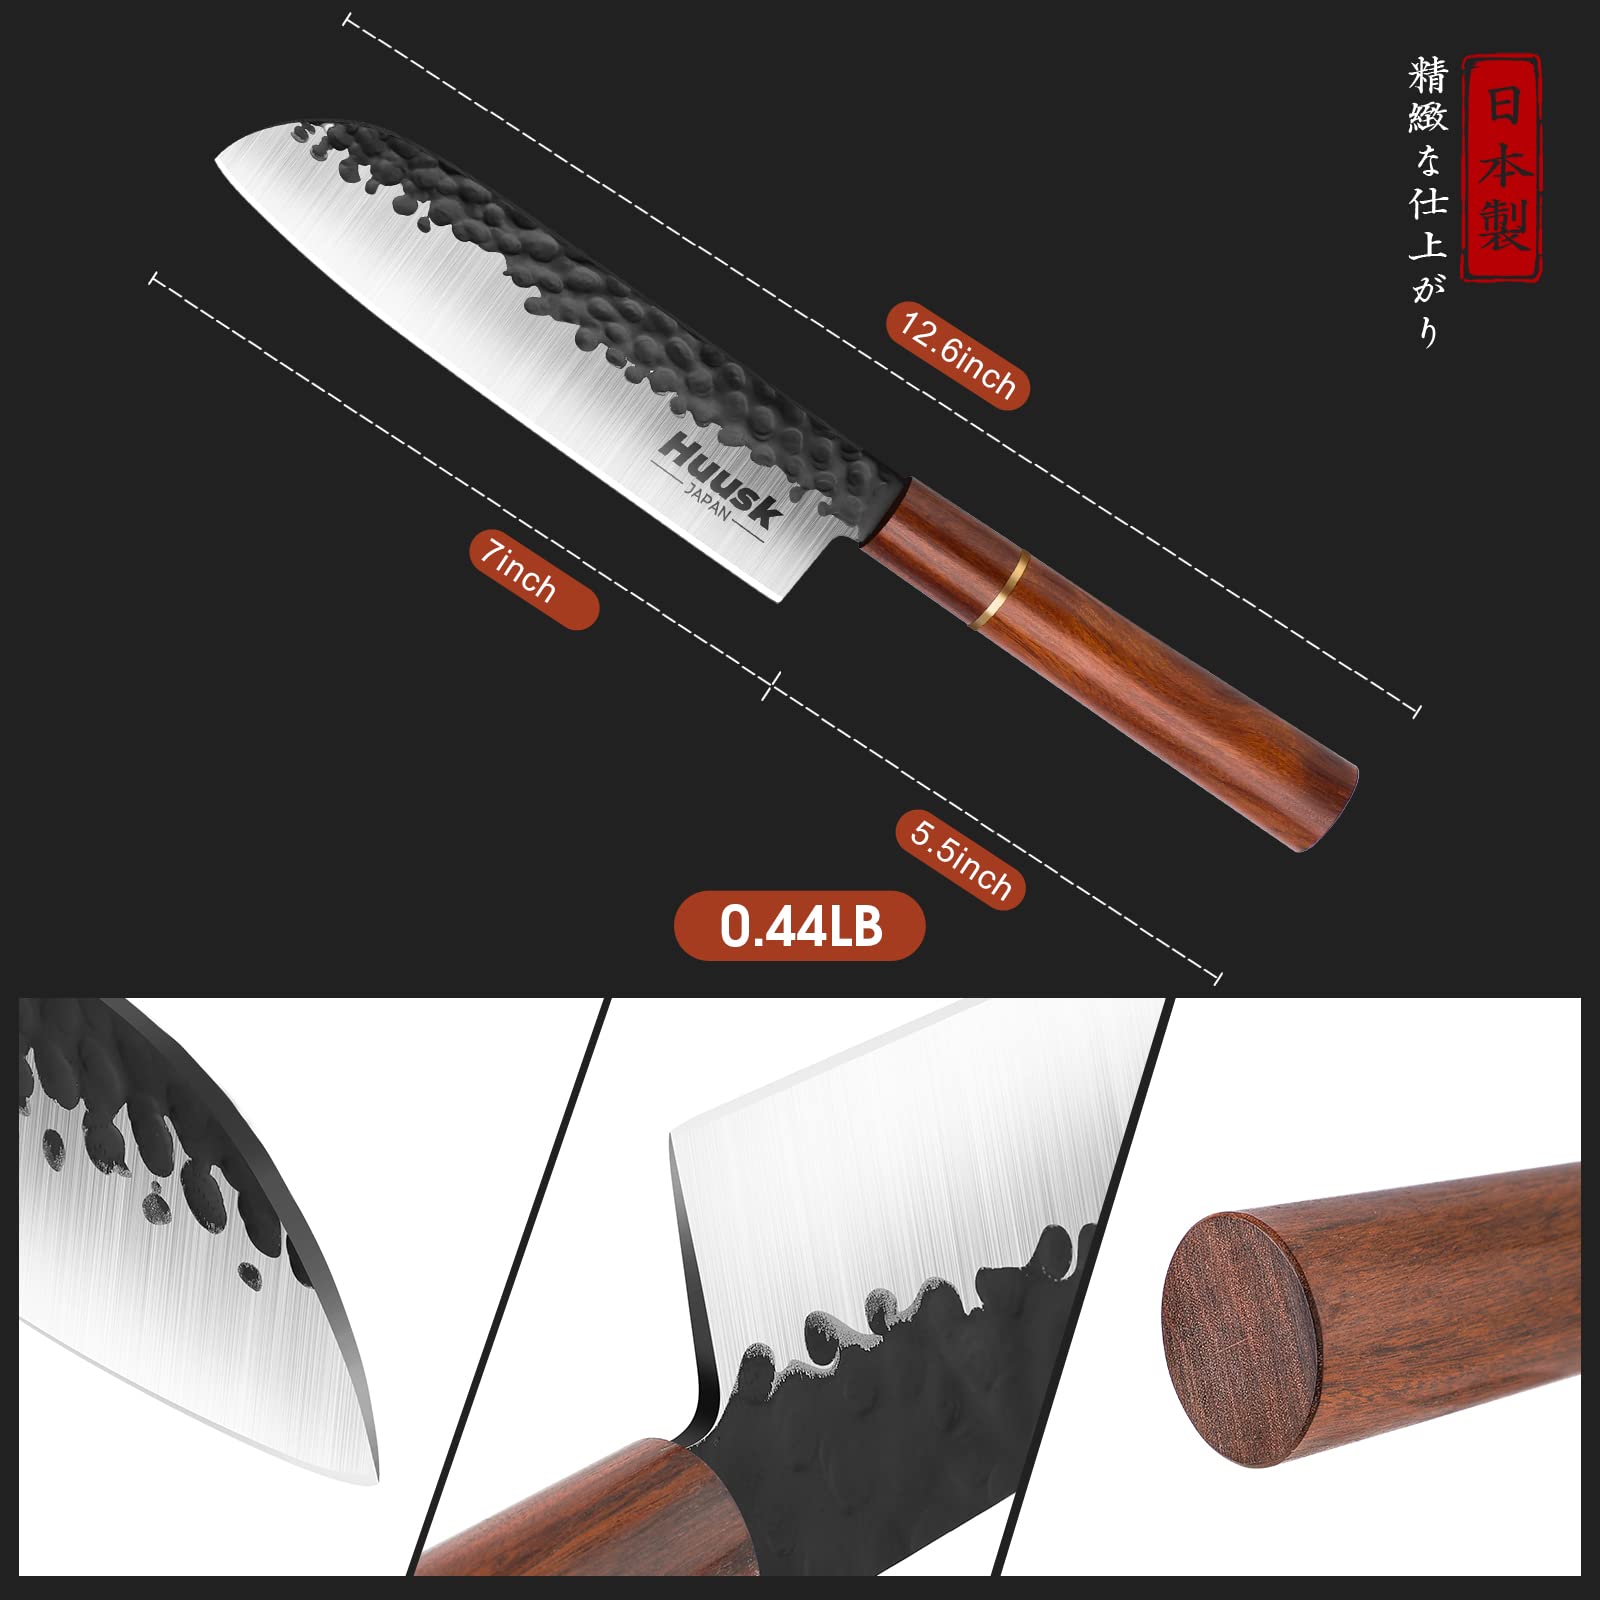 Huusk Japan Chef Knife Set, Santoku Japanese Kitchen Knife 7 inch and Nakiri Knife Vegetable & Fruit Knife 7inch, Hand Forged Cooking Knives